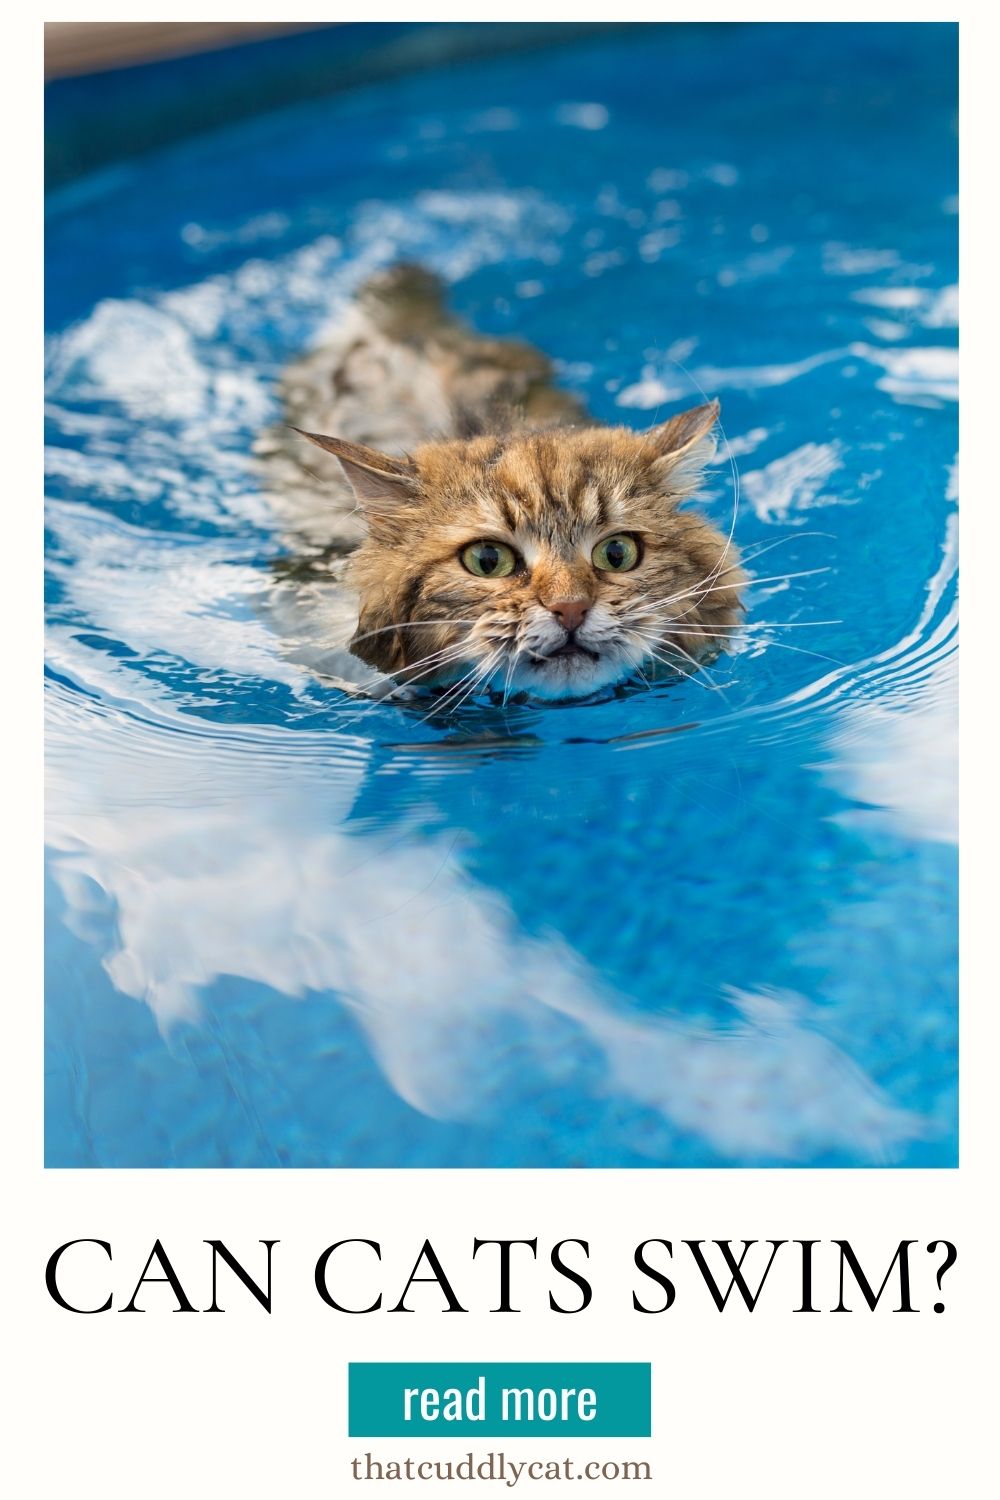 A cat swimming in a pool